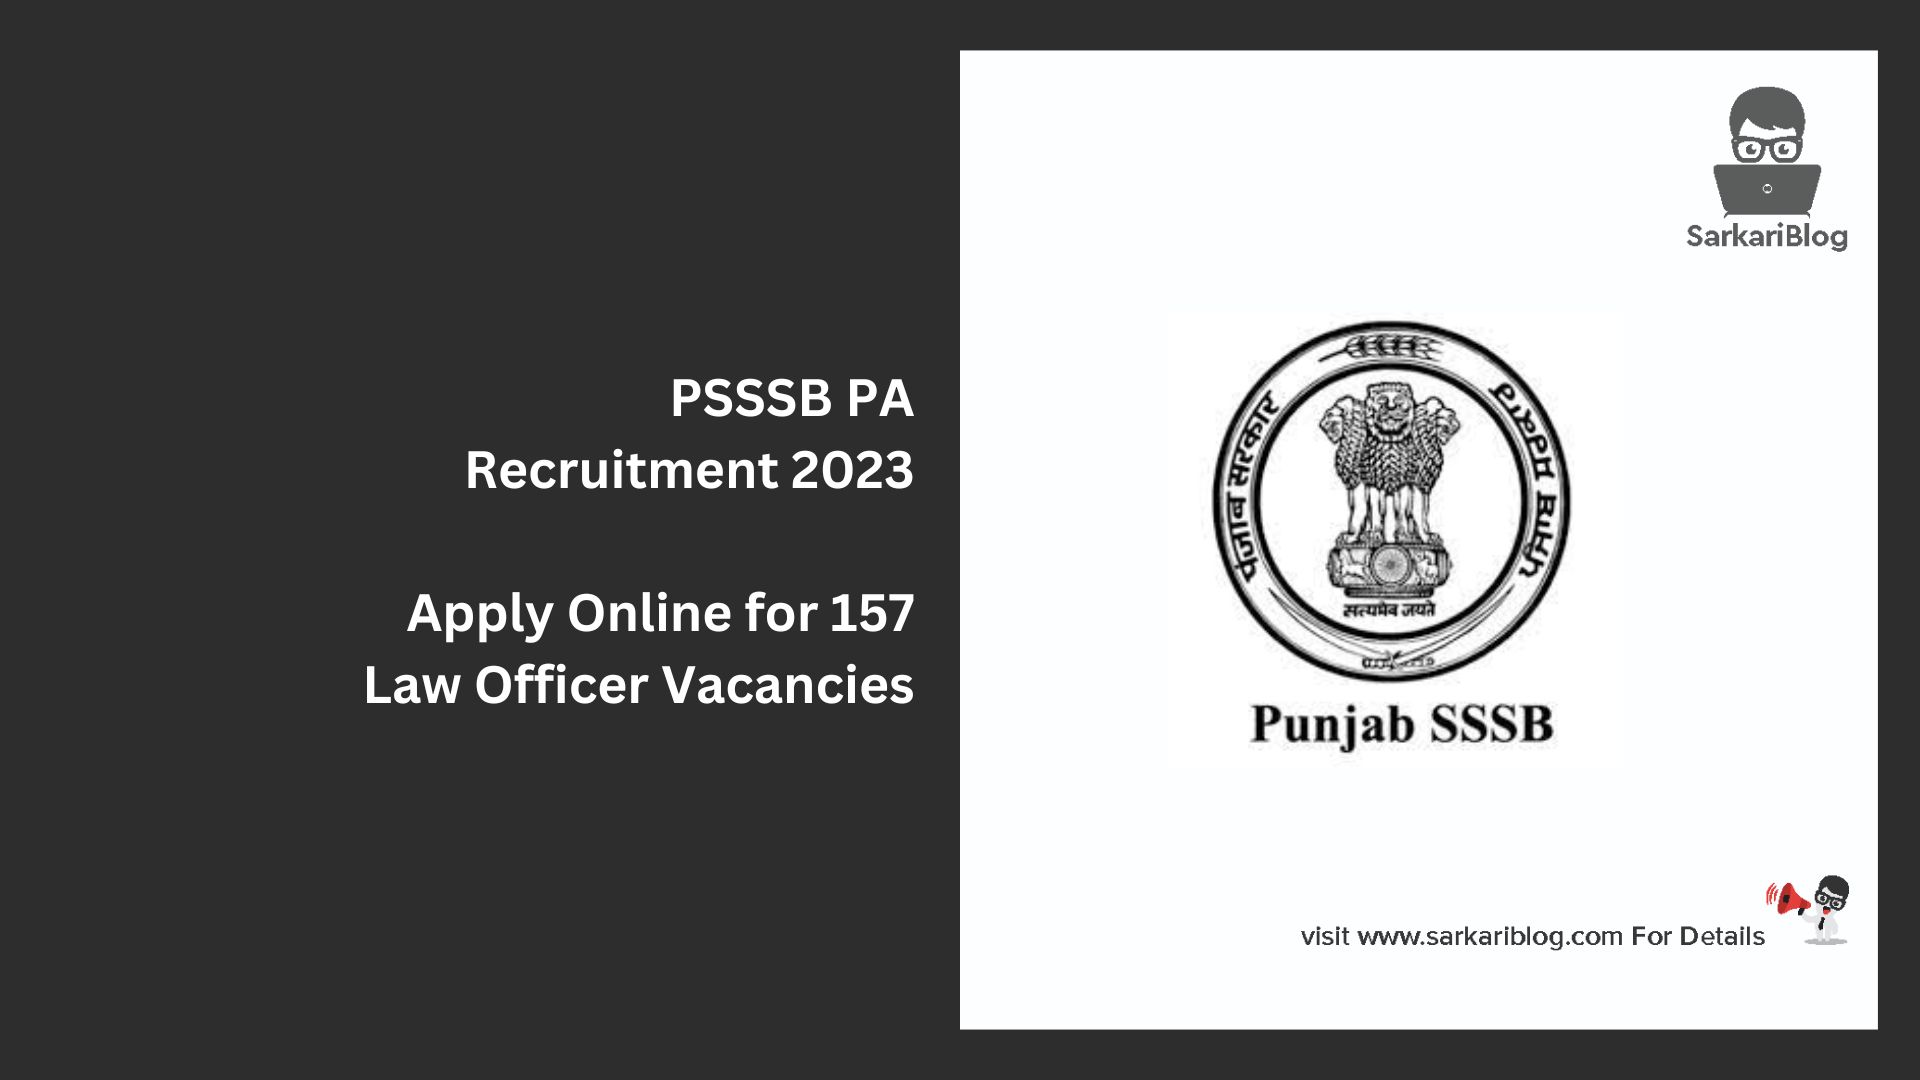 PSSSB PA Recruitment 2023